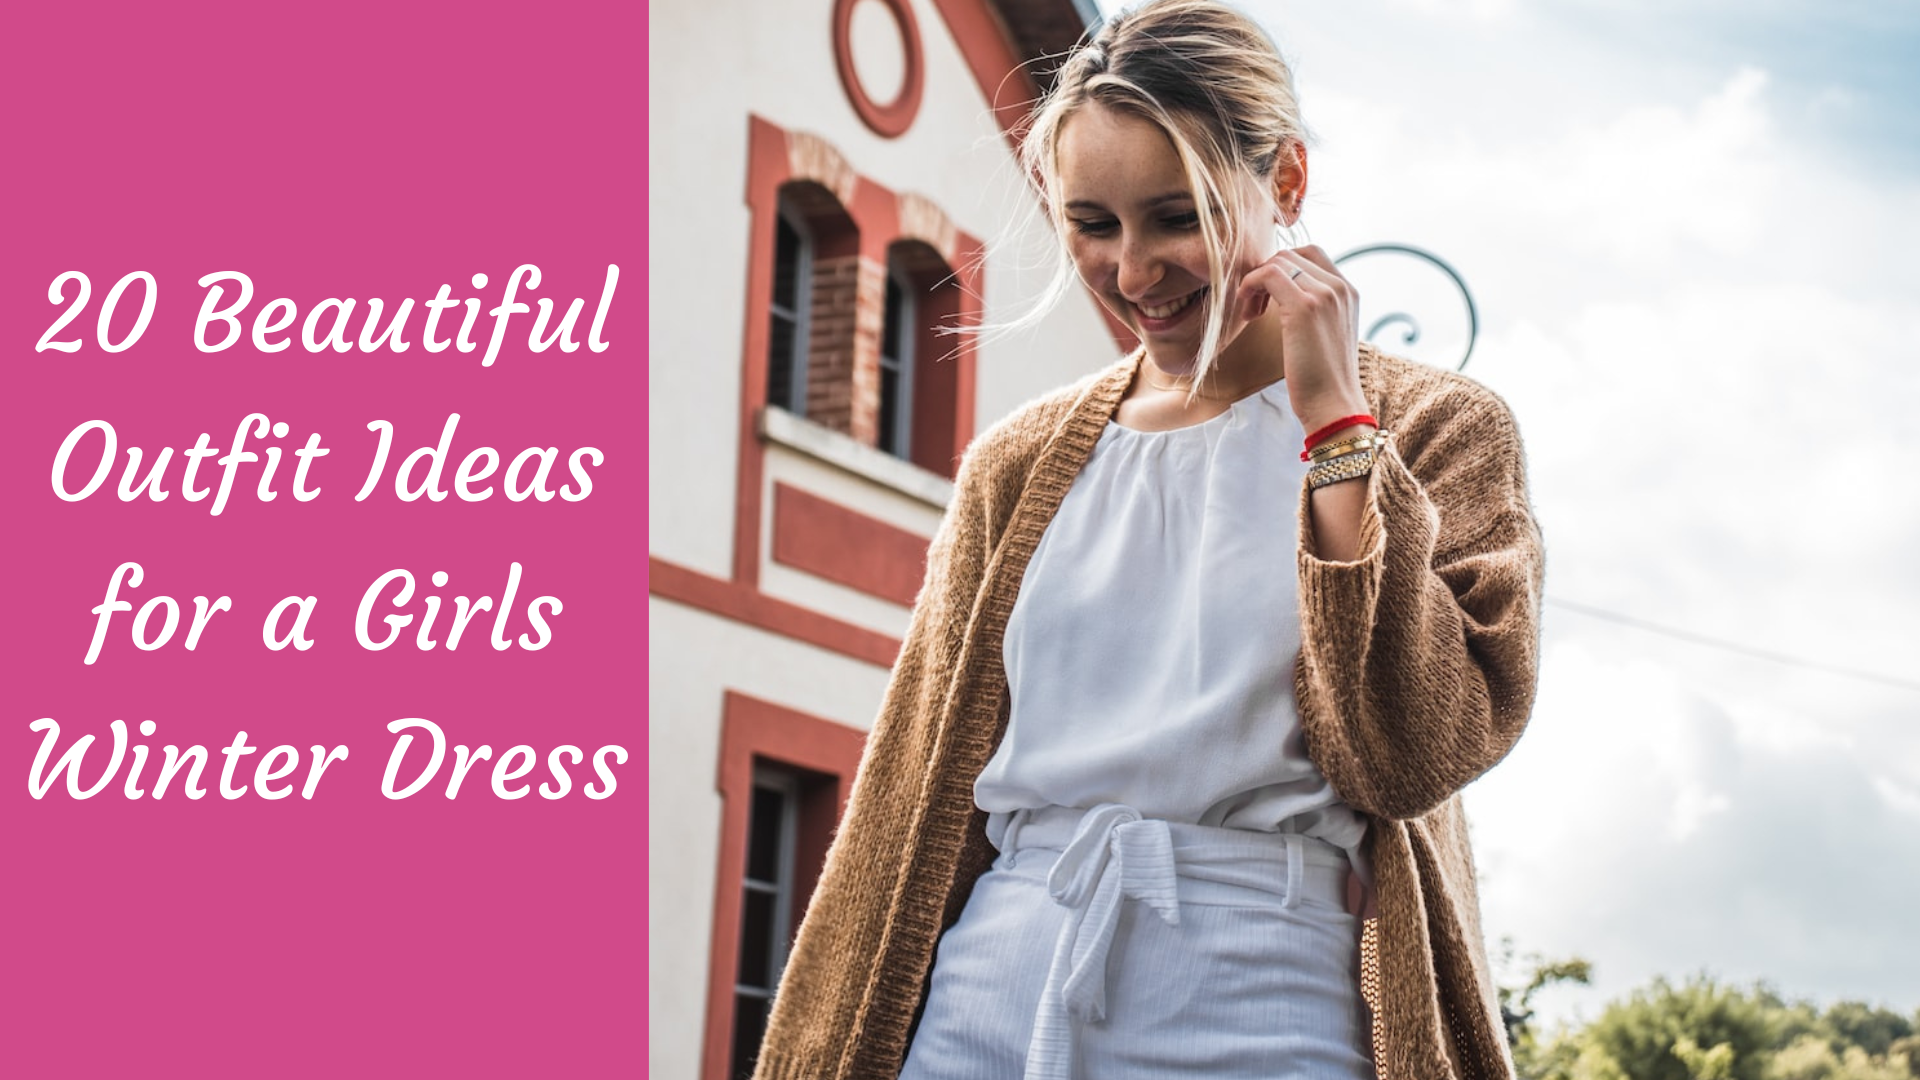 20 Beautiful Outfit Ideas for a Girls Winter Dress - The Kosha Journal